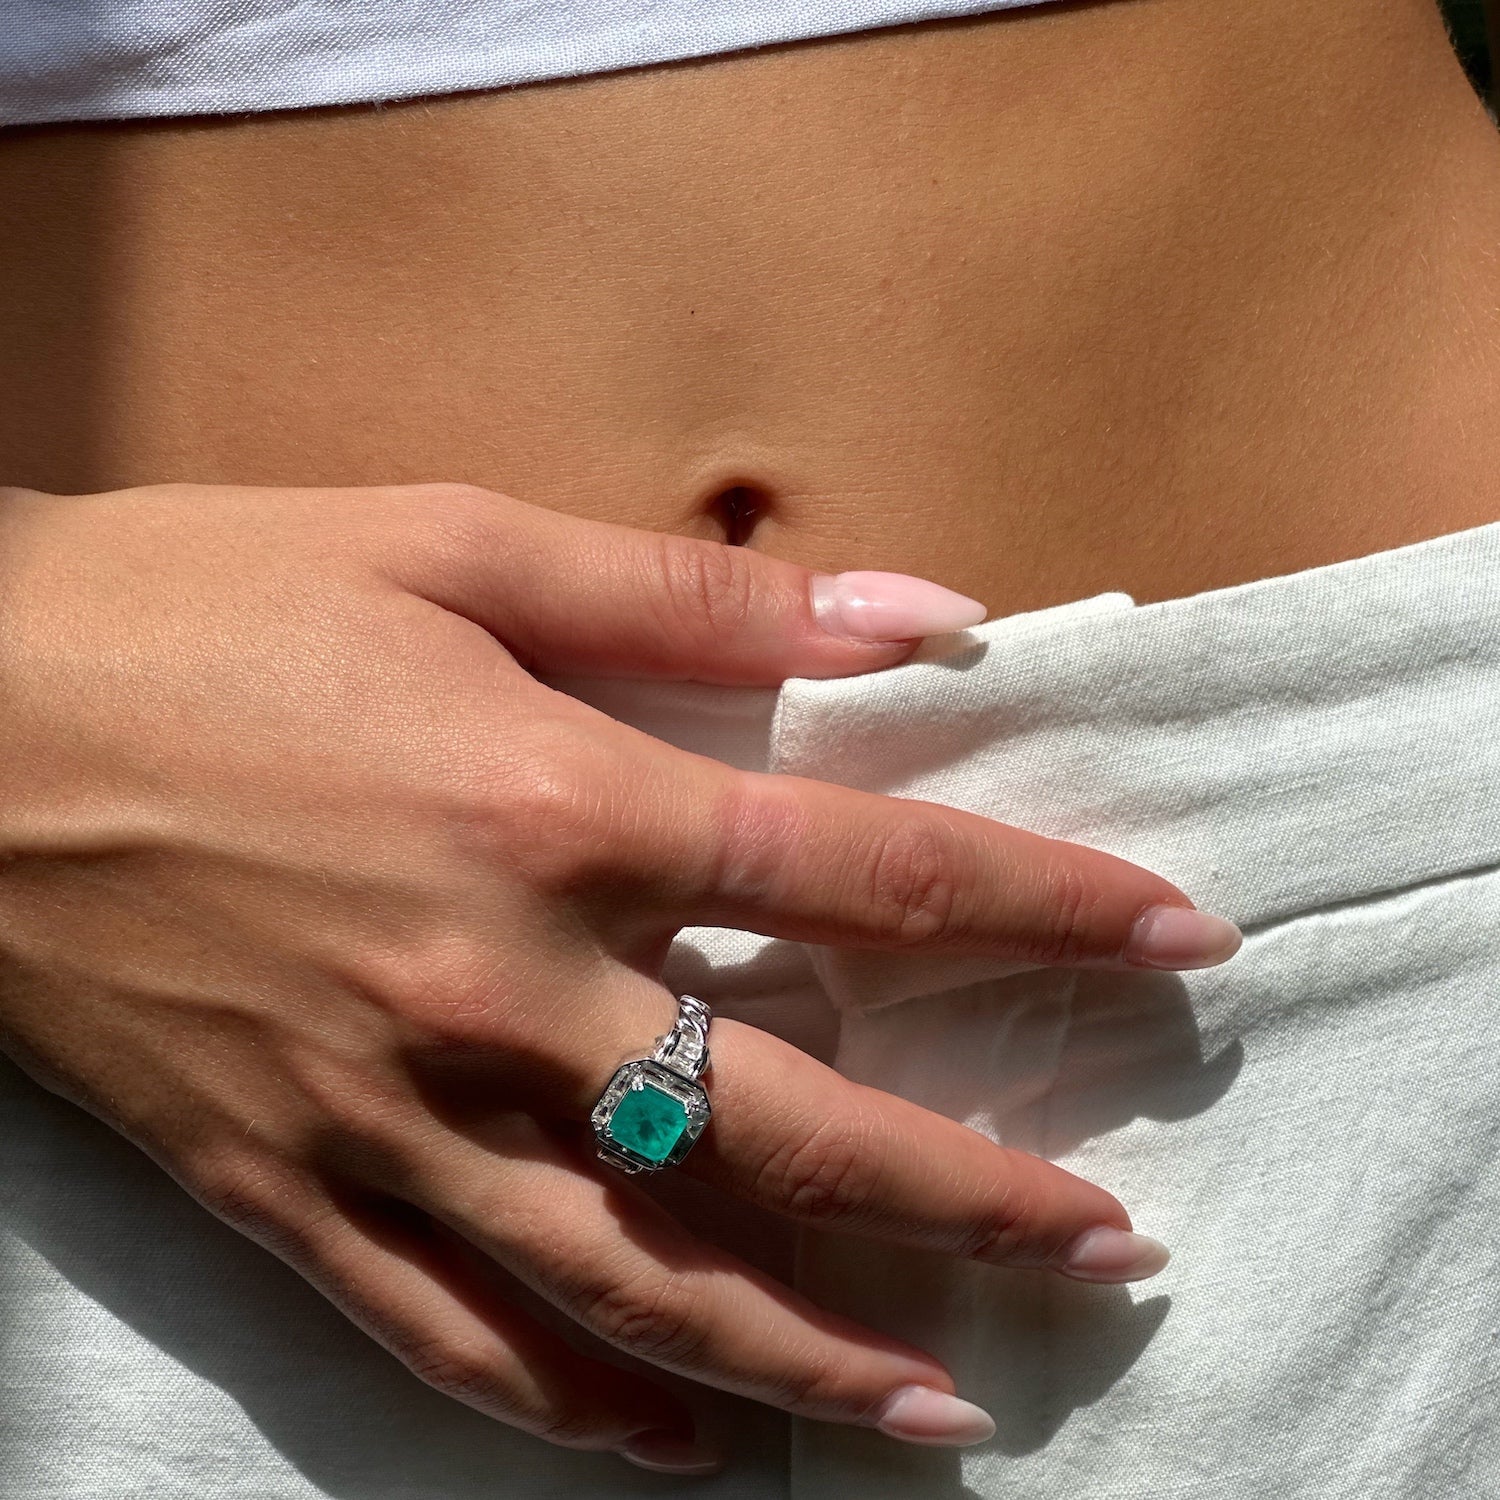 Captivating Paraiba Tourmaline Ring on Model's Hand - Unparalleled Beauty